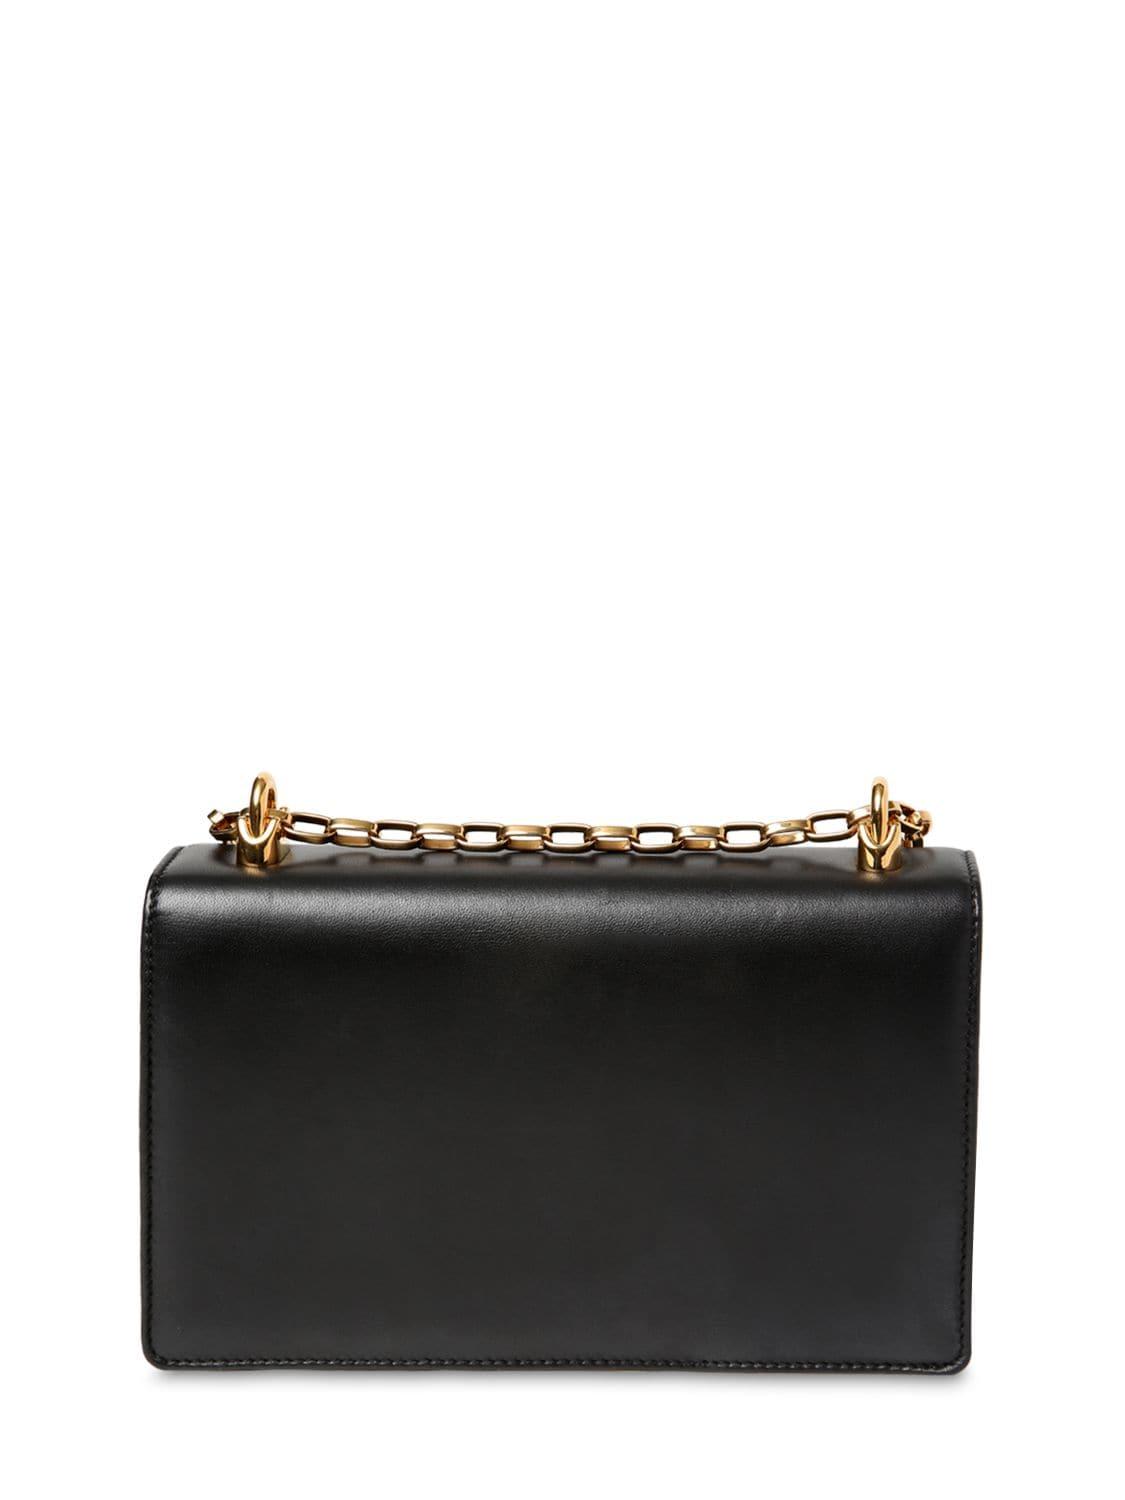 Dolce & Gabbana Dg Girls Shoulder Bag In Nappa Leather in Black - Lyst